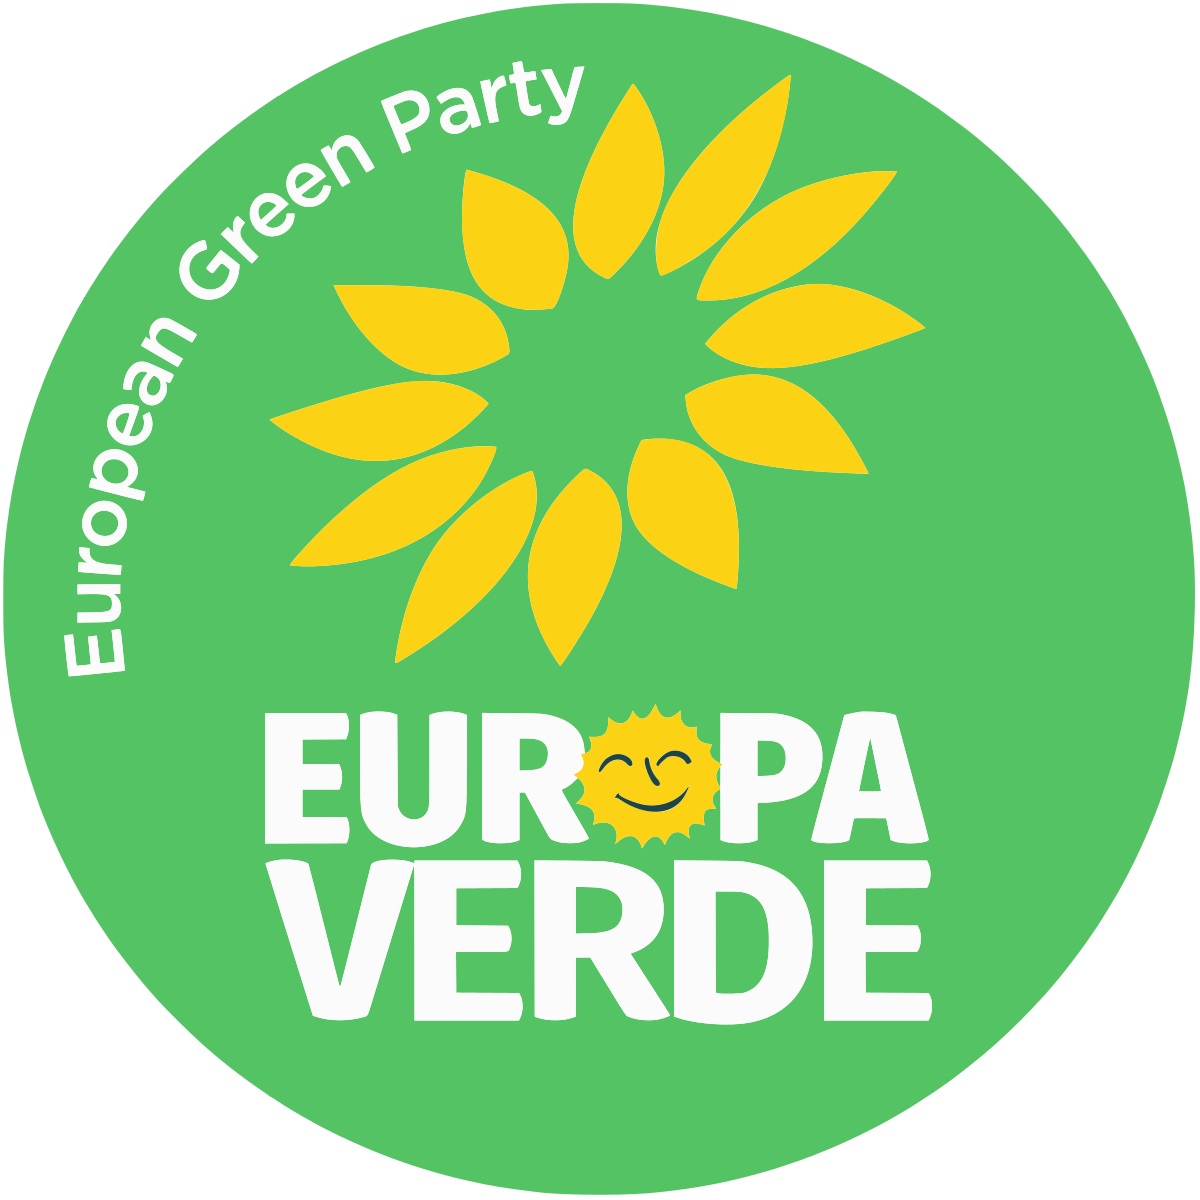 Europa Verde spiega a cosa è favorevole ed a cosa è contraria